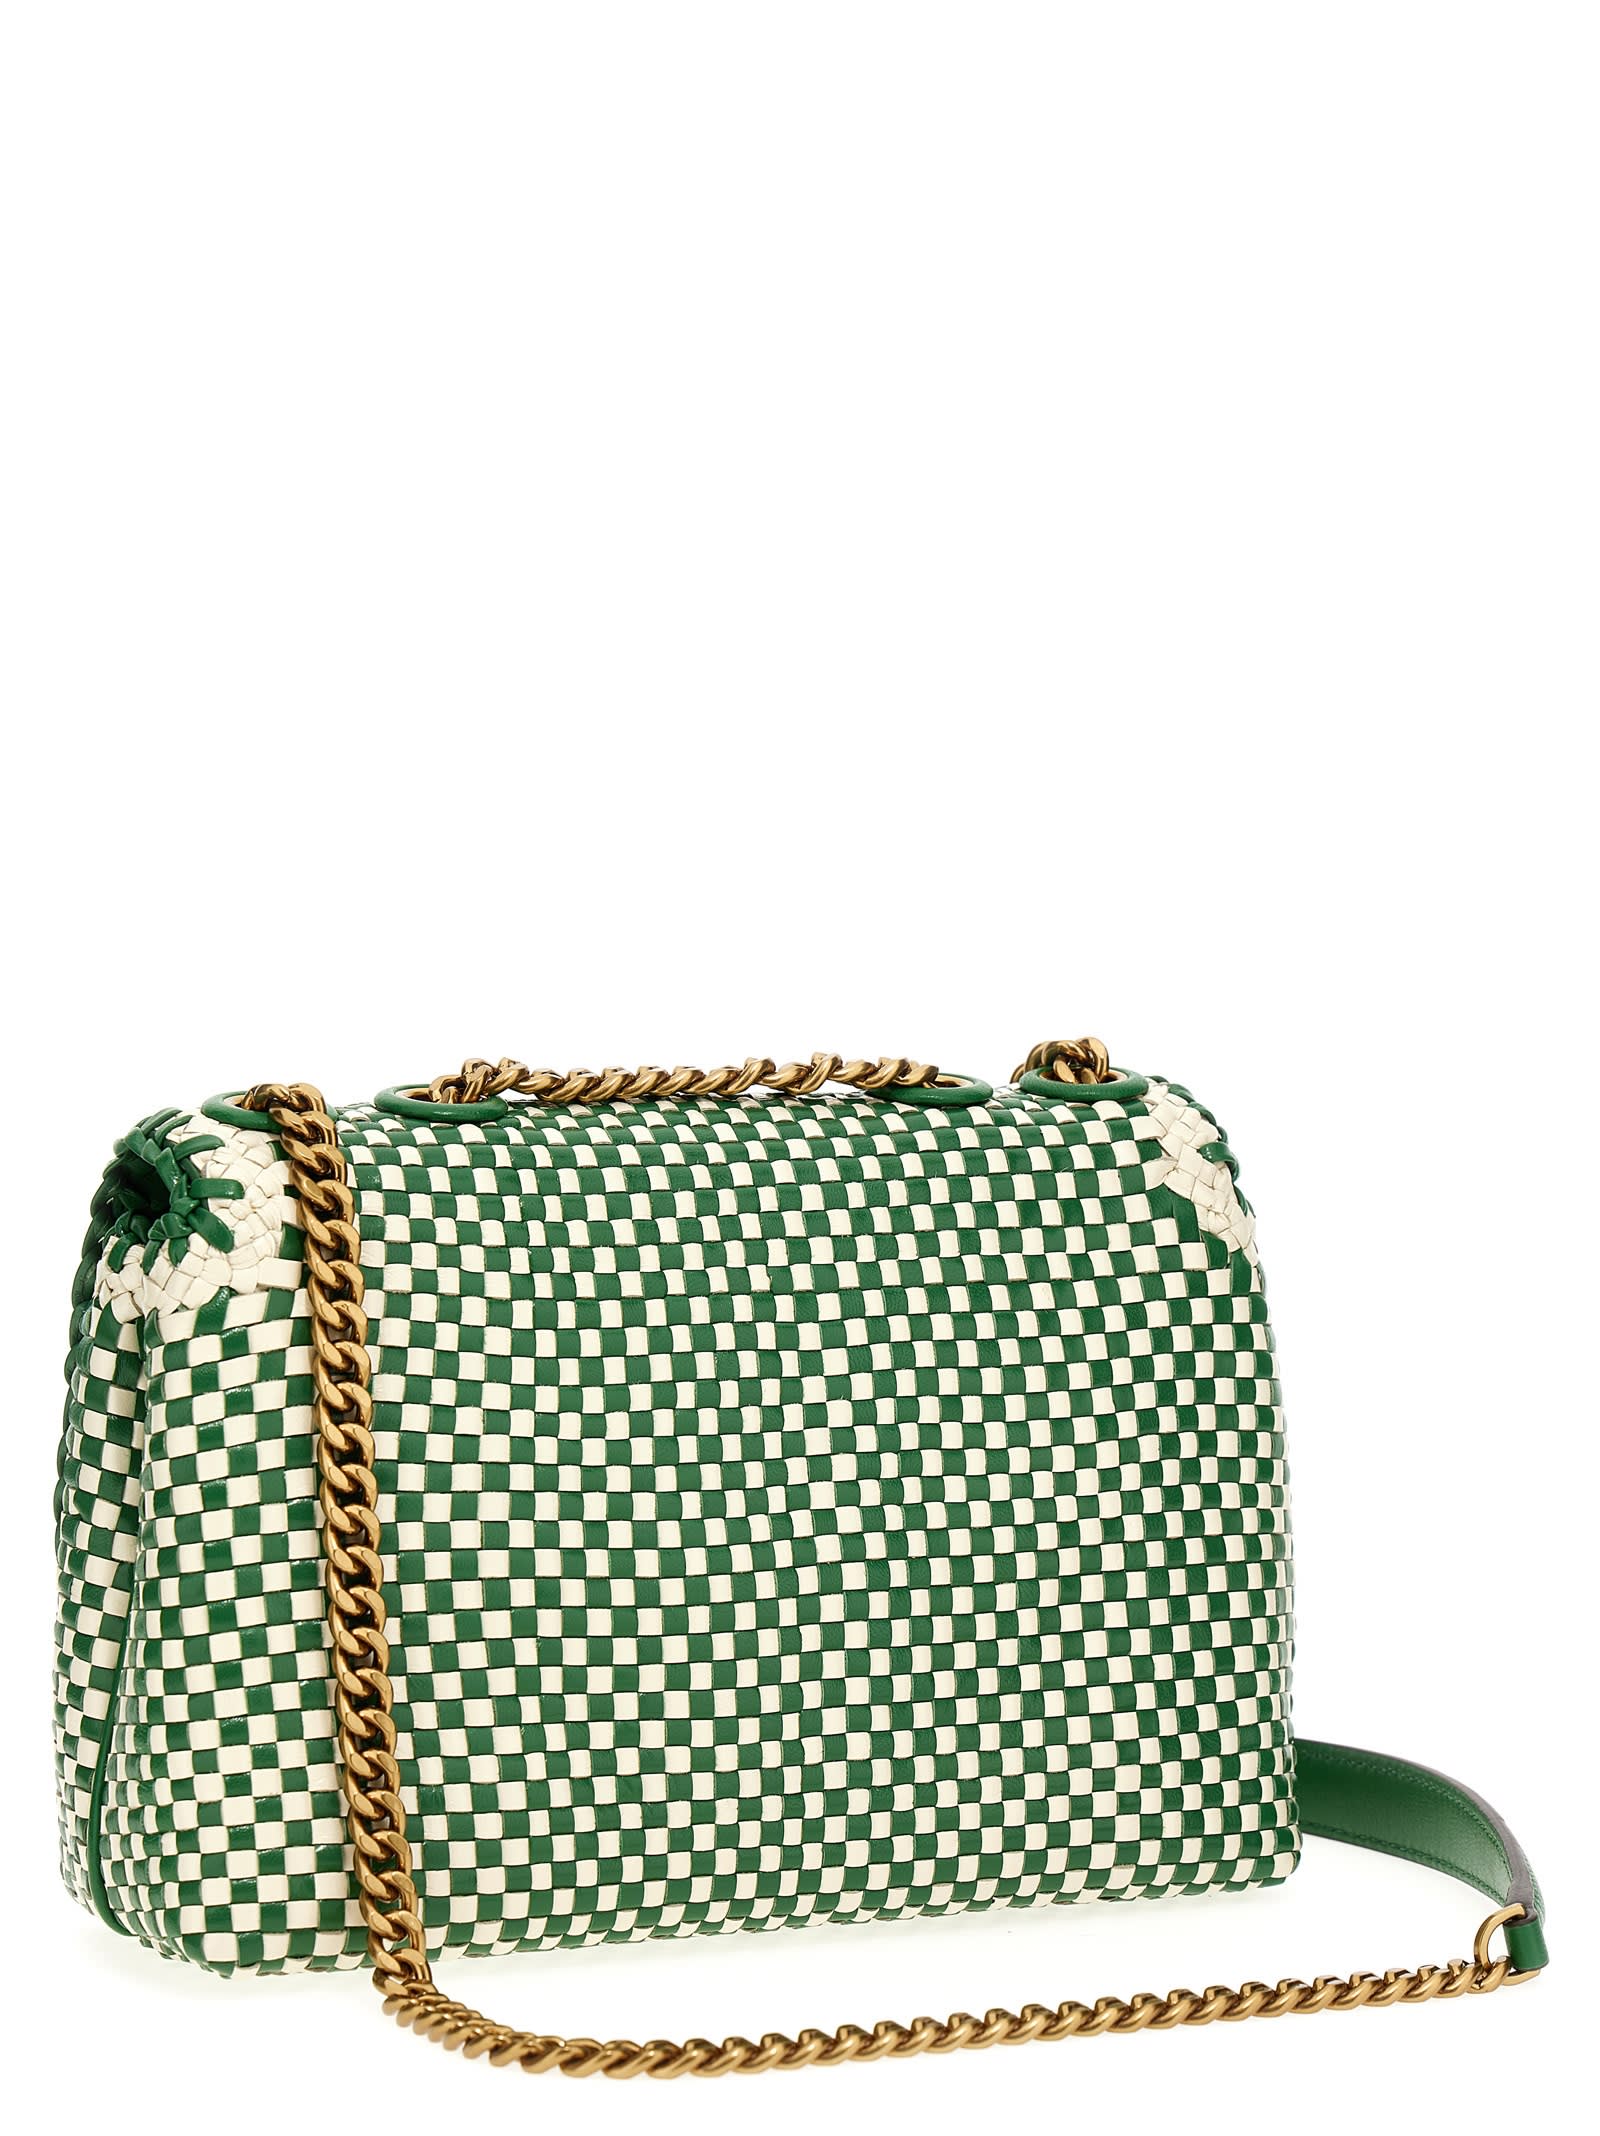 Tory Burch L84108 Green Kira Chevron Shoulder Bag Size 8x5x2 in